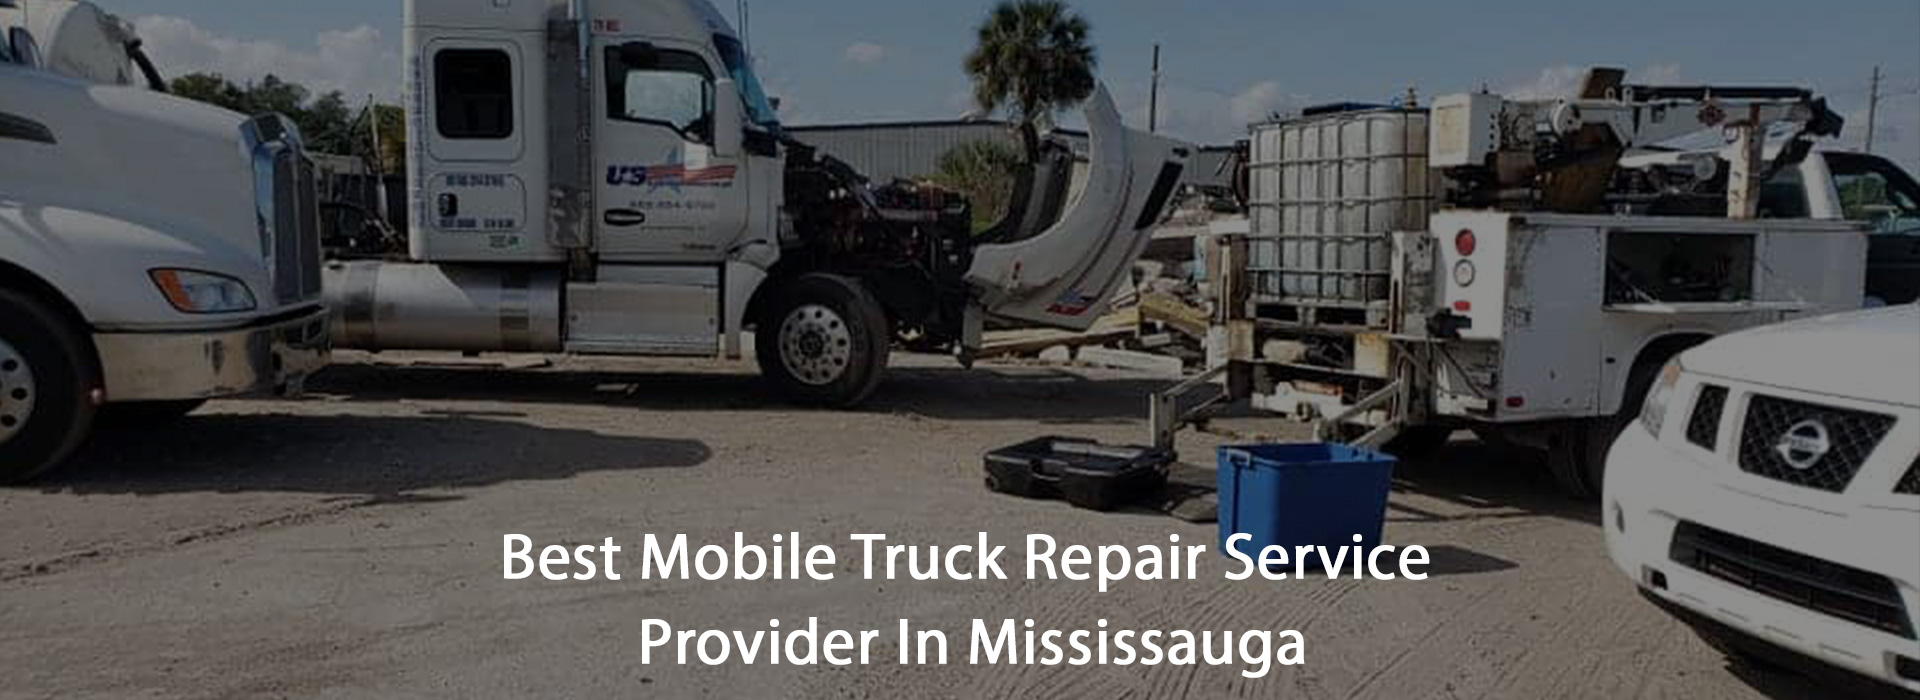 Mobile Truck Repair Service Provider In Mississauga